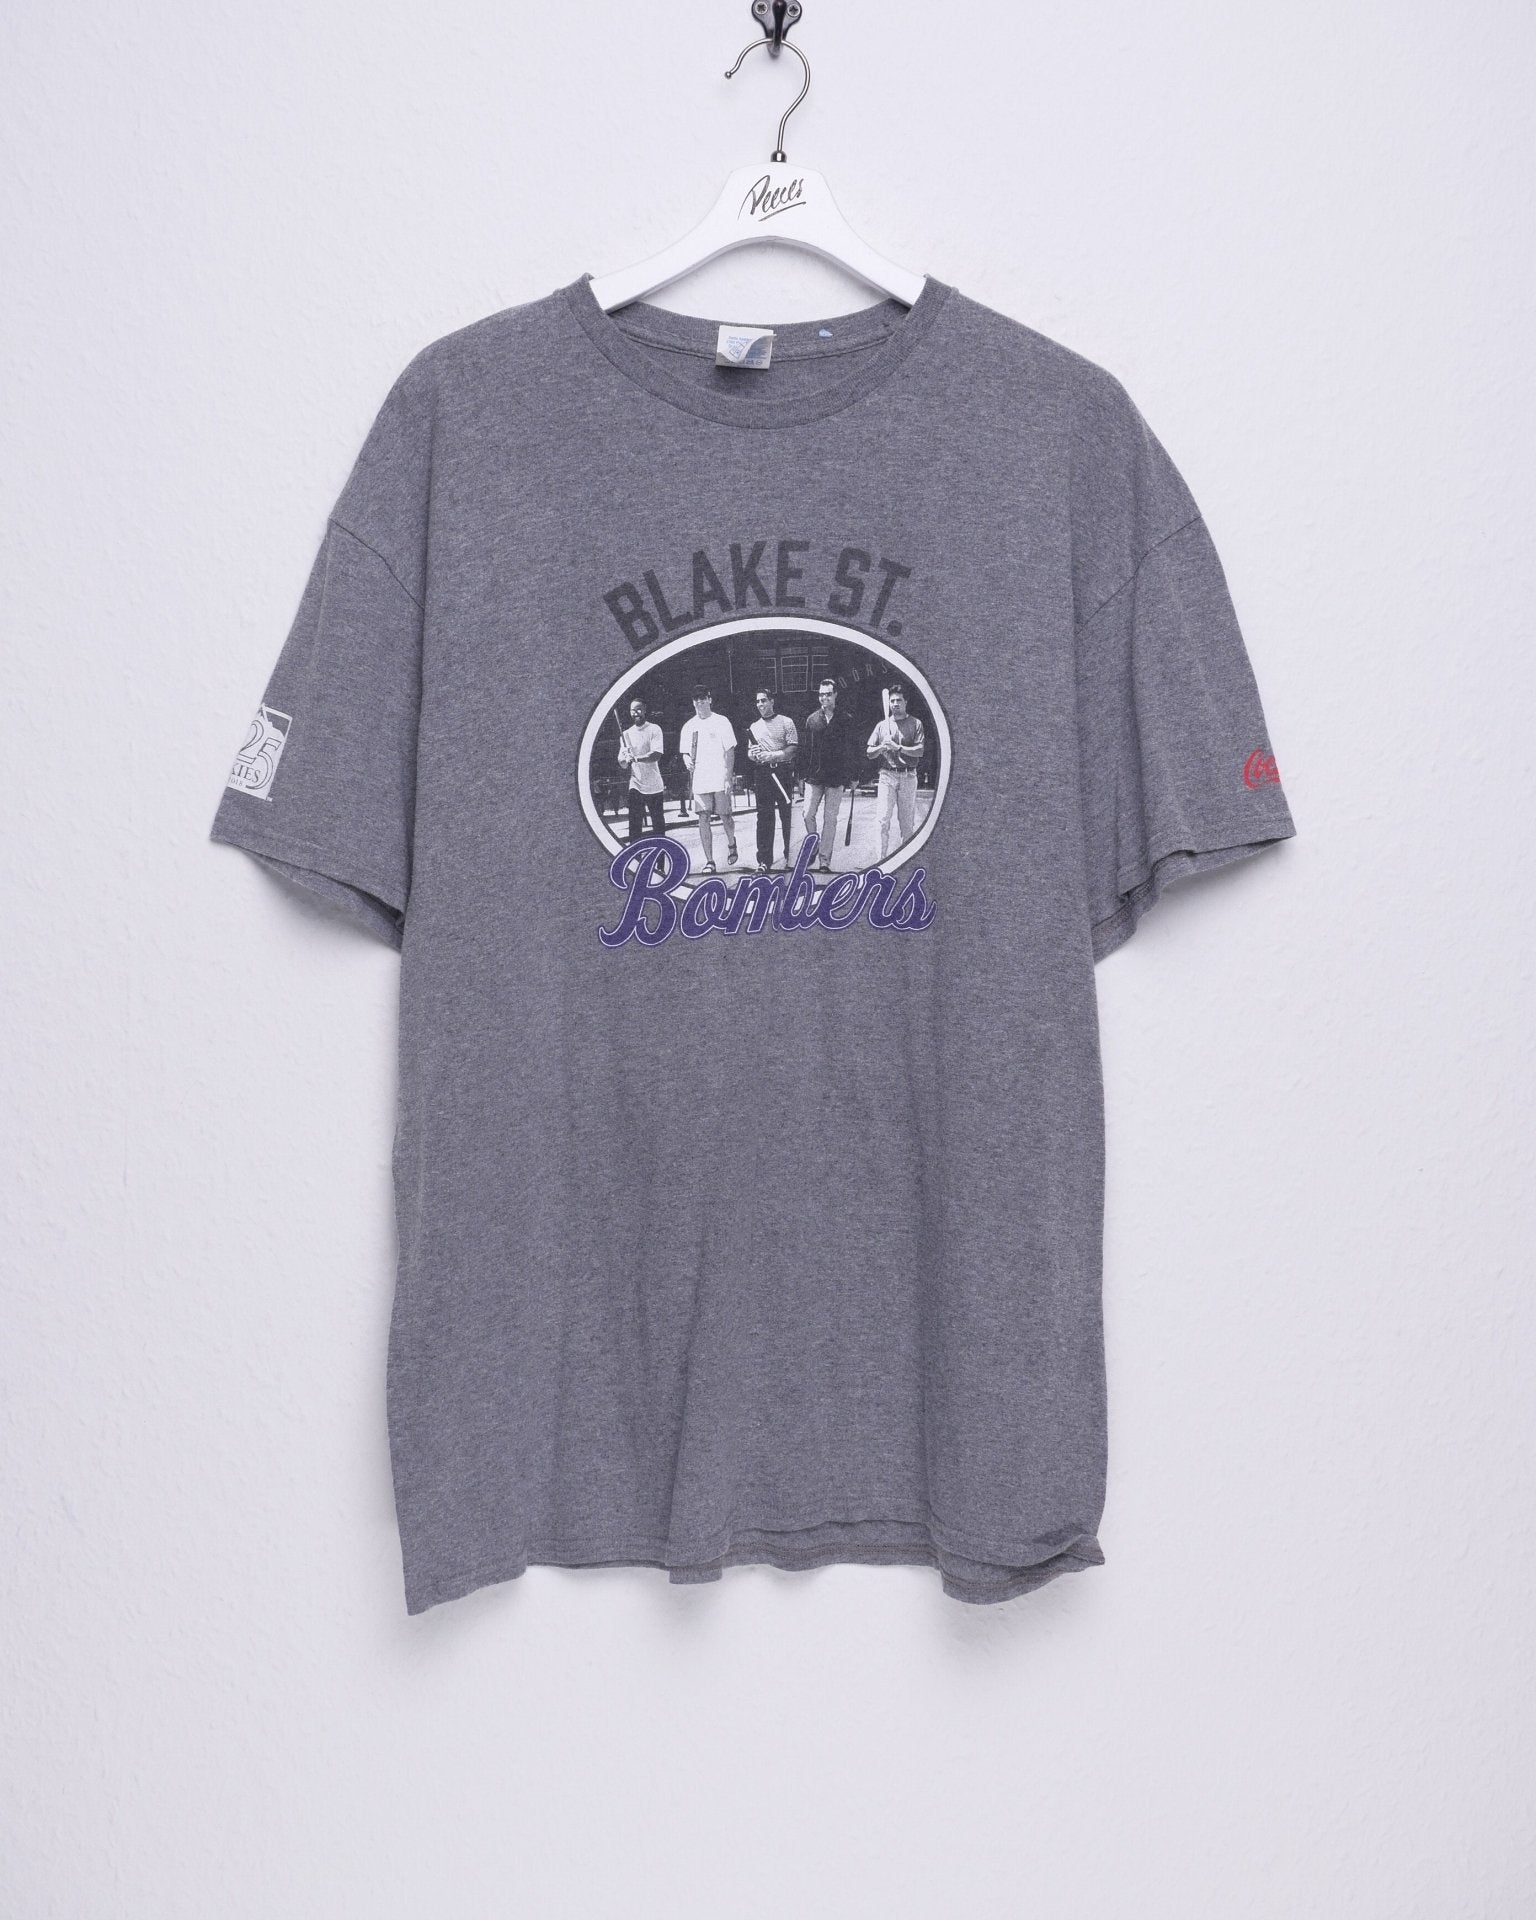 Blake St. Bombers printed Graphic grey Shirt - Peeces